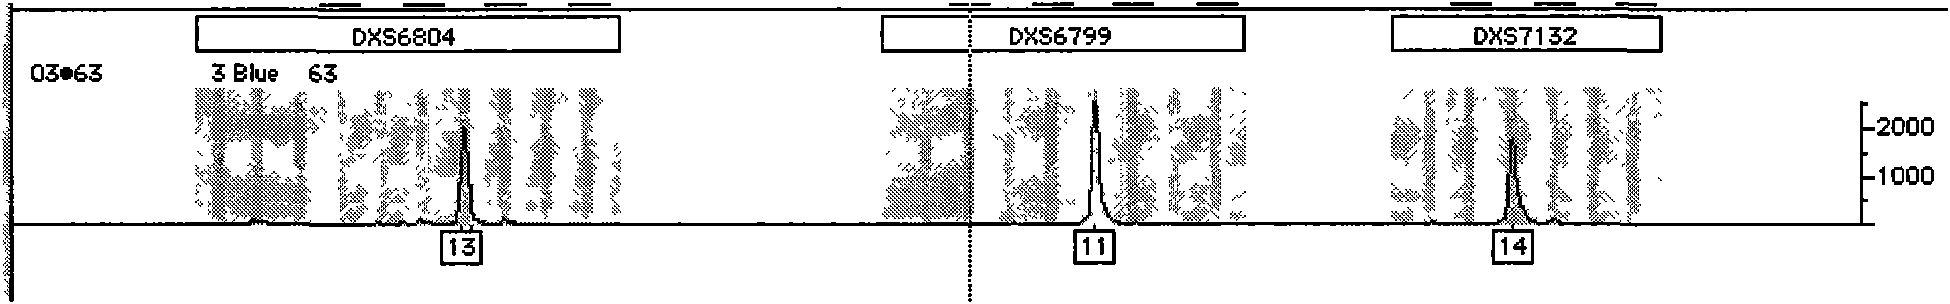 Fluorescent detecting method for X chromosome STR gene site typing